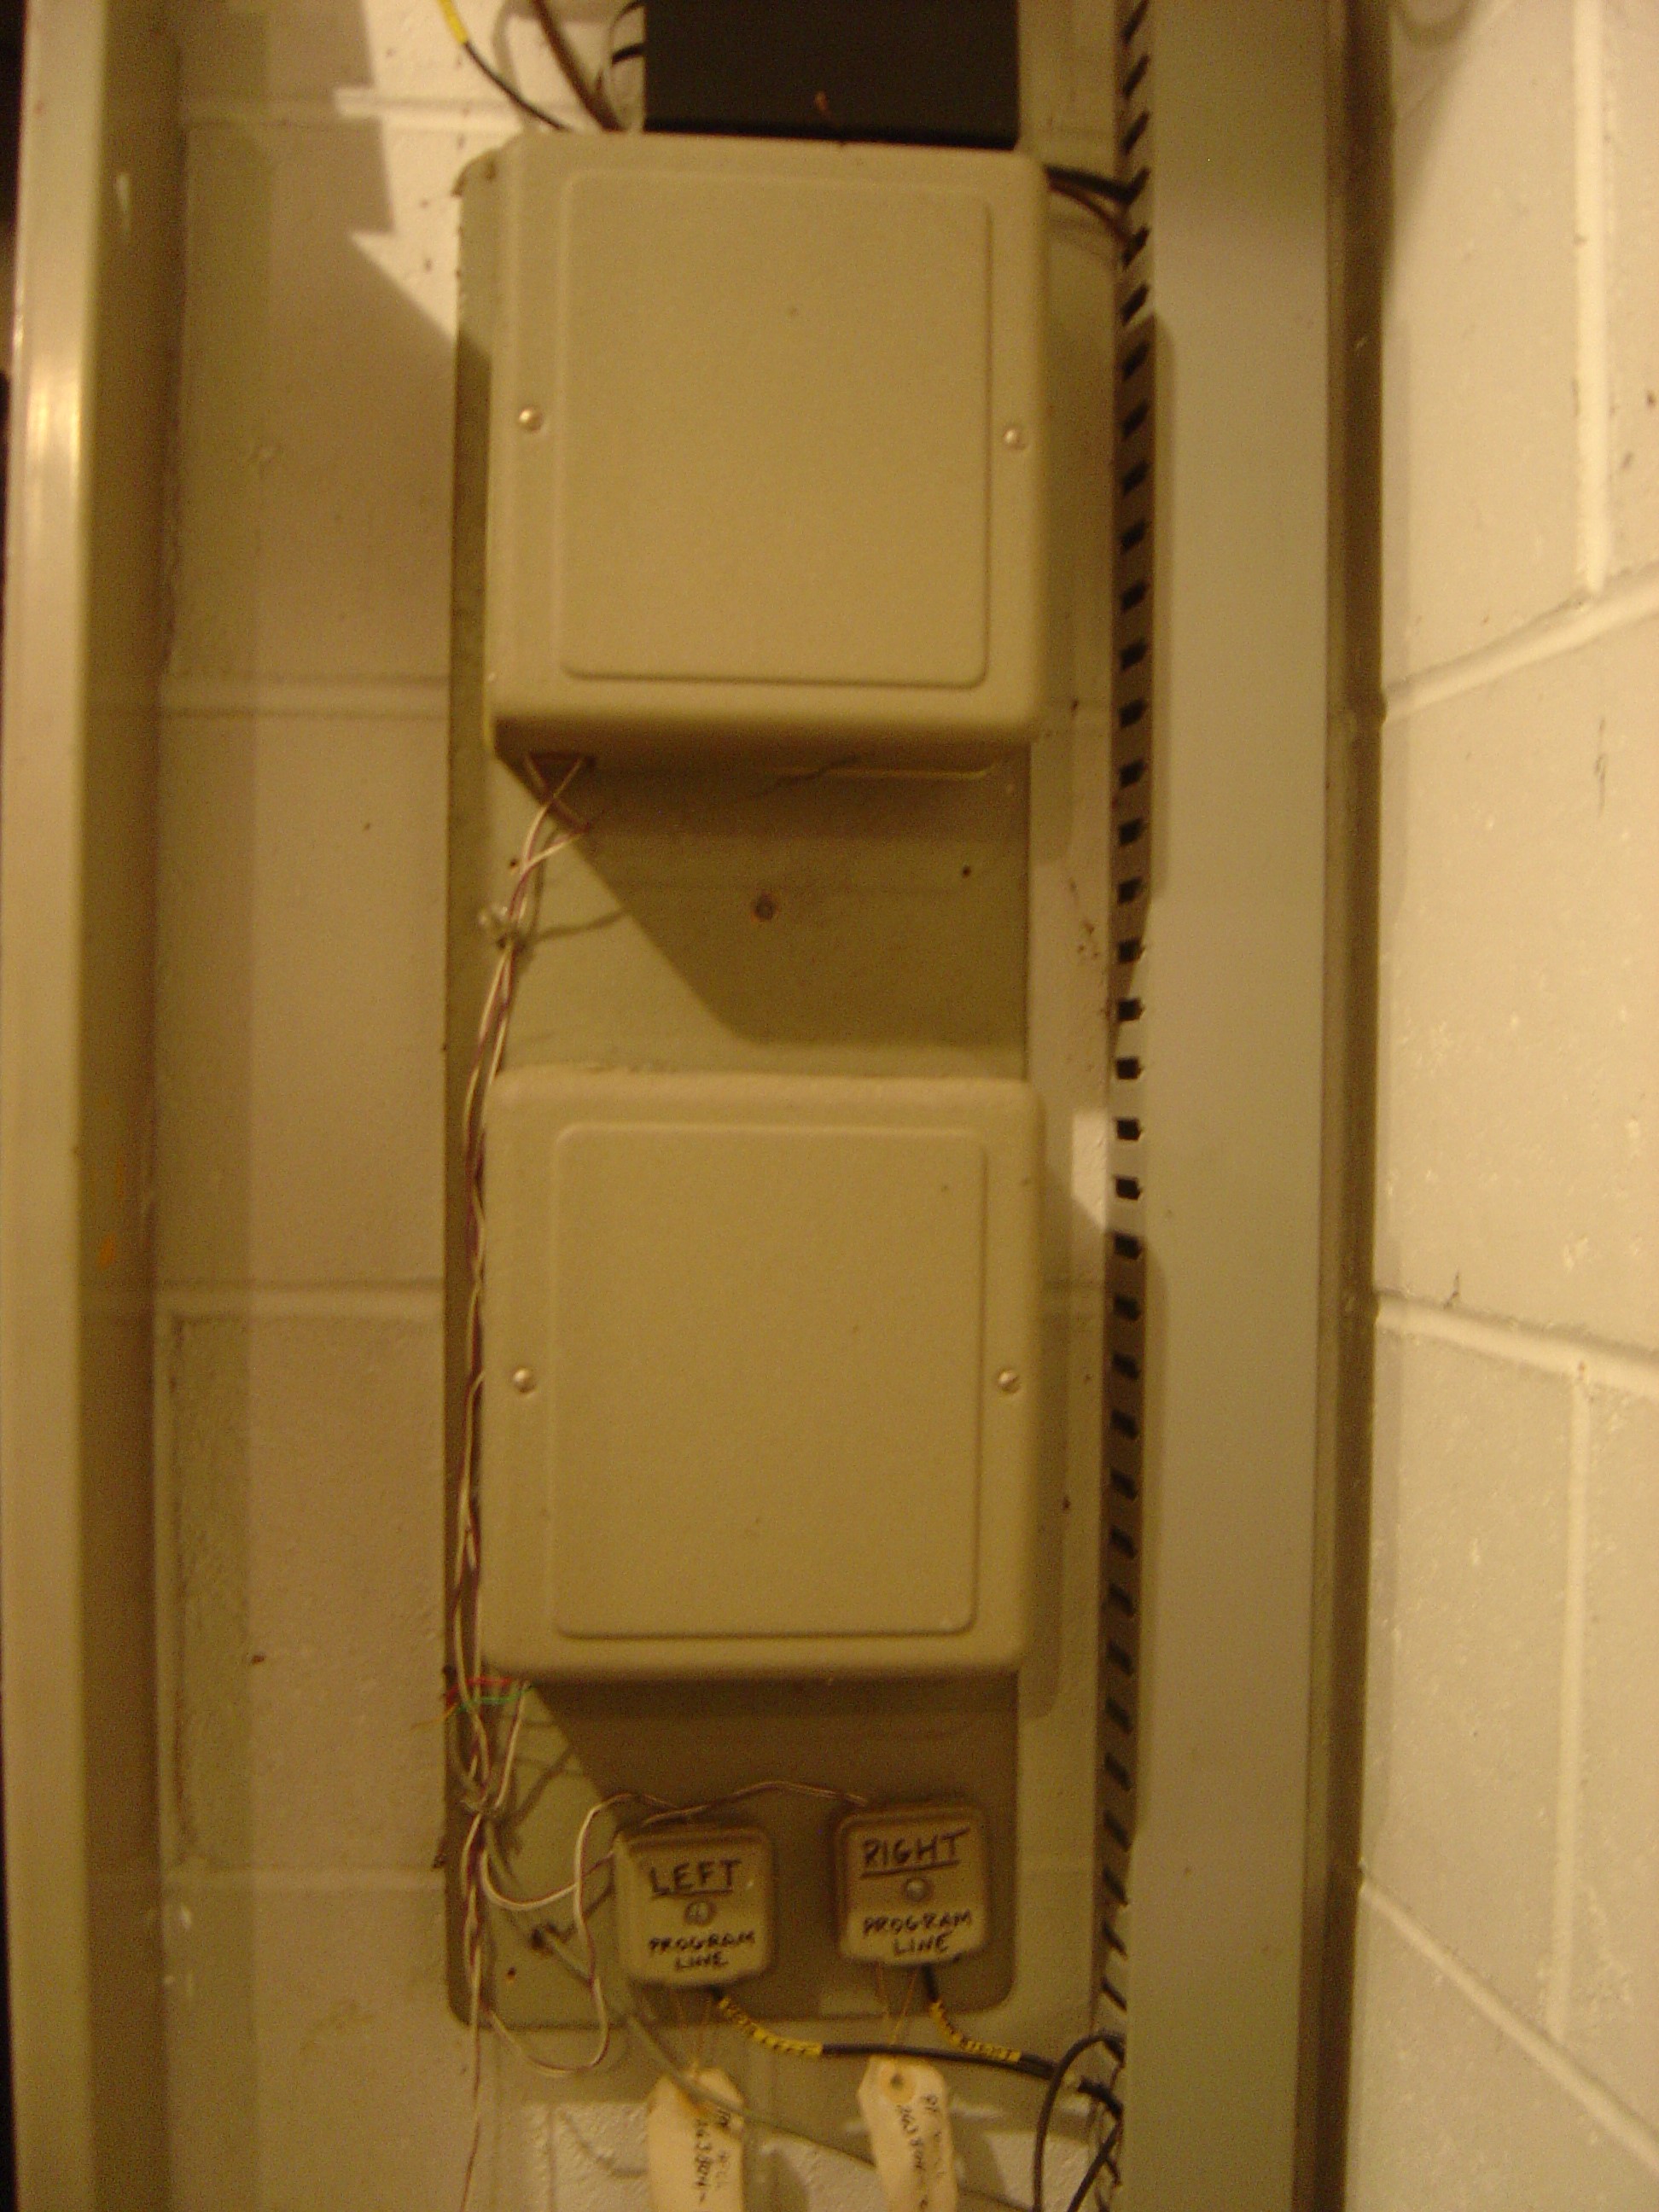 Analog Telco equipment at the Transmitter